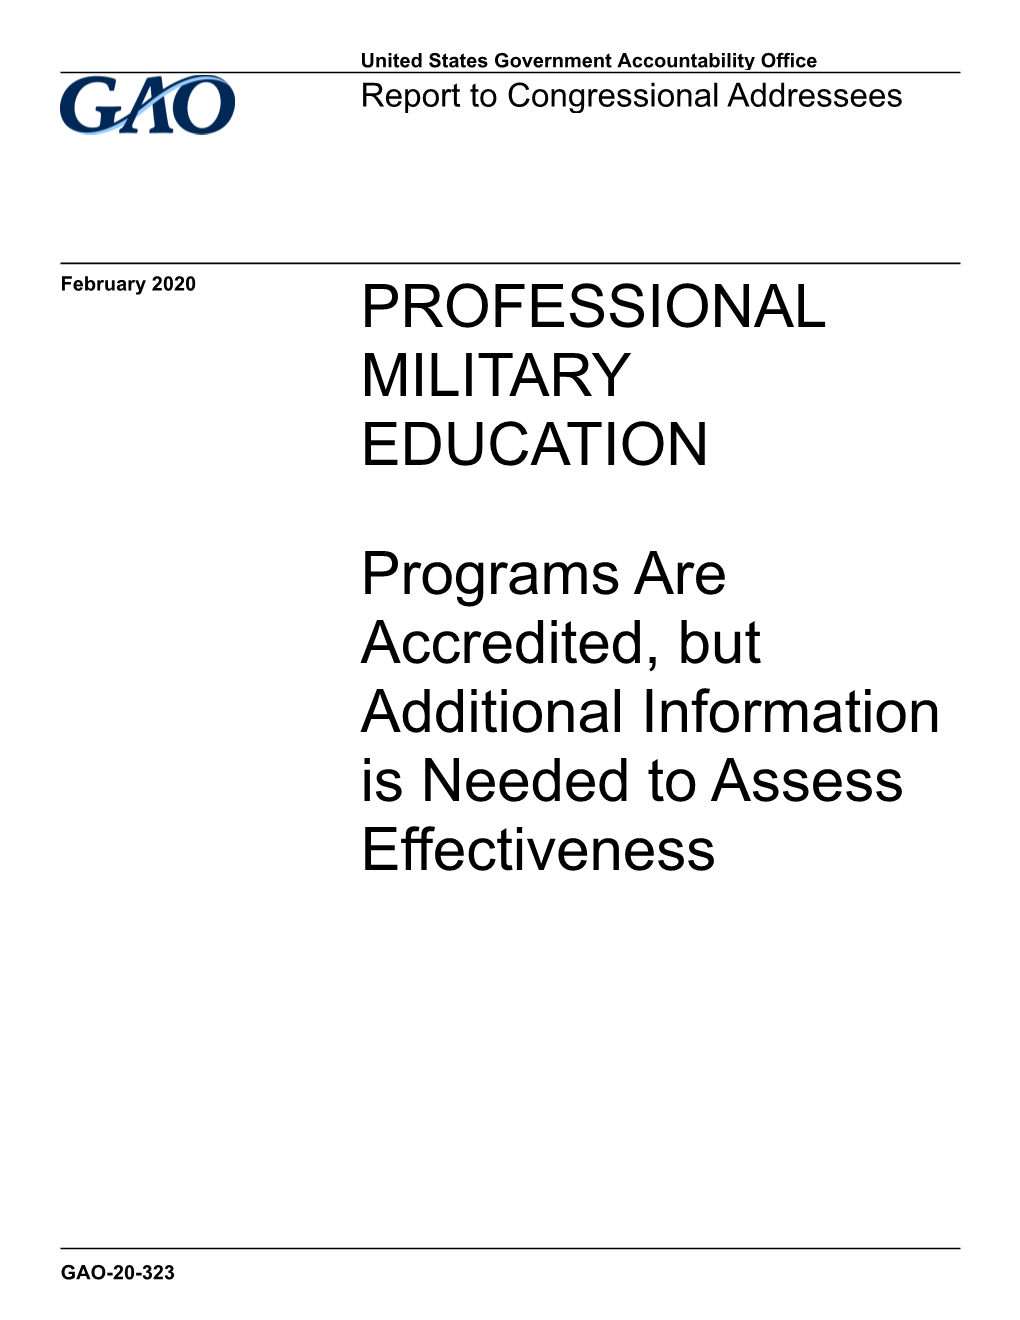 Gao- 20-323, Professional Military Education